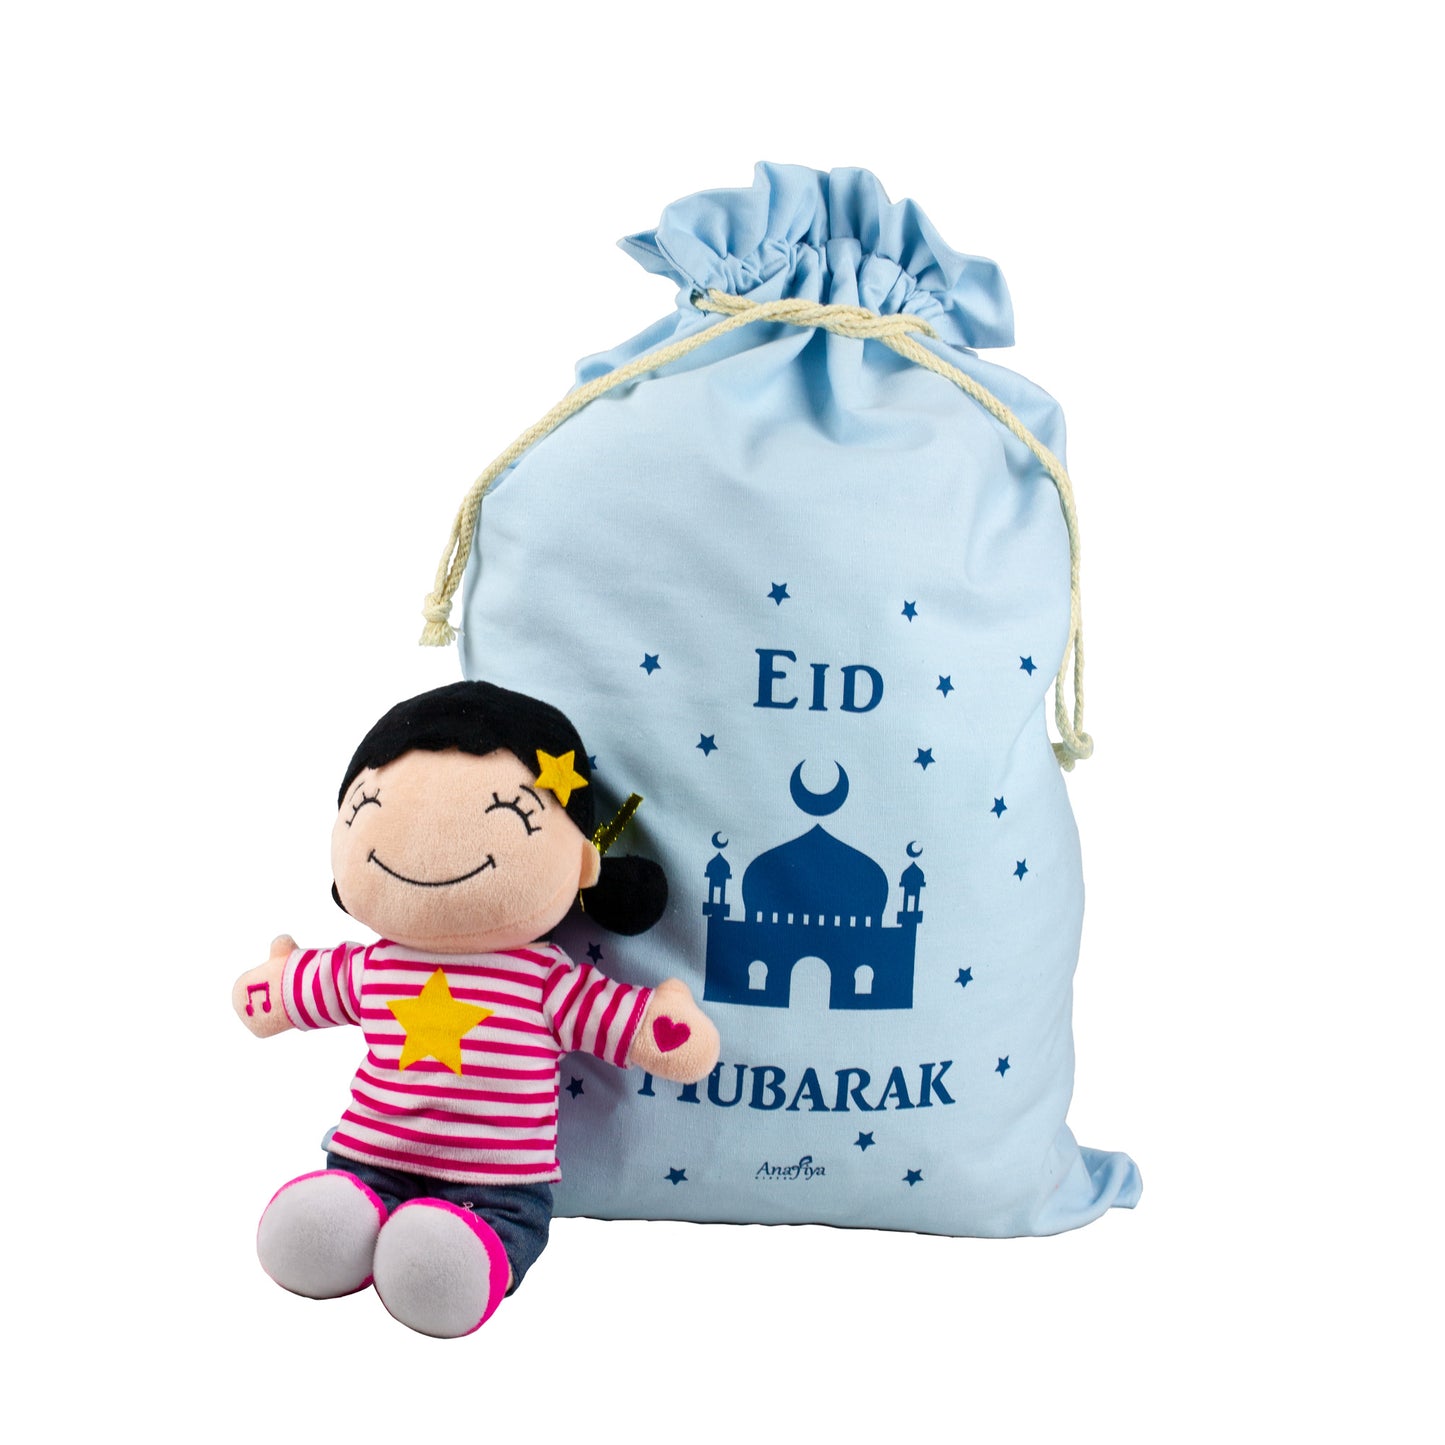 Eid Mubarak Gift Sack - Blue